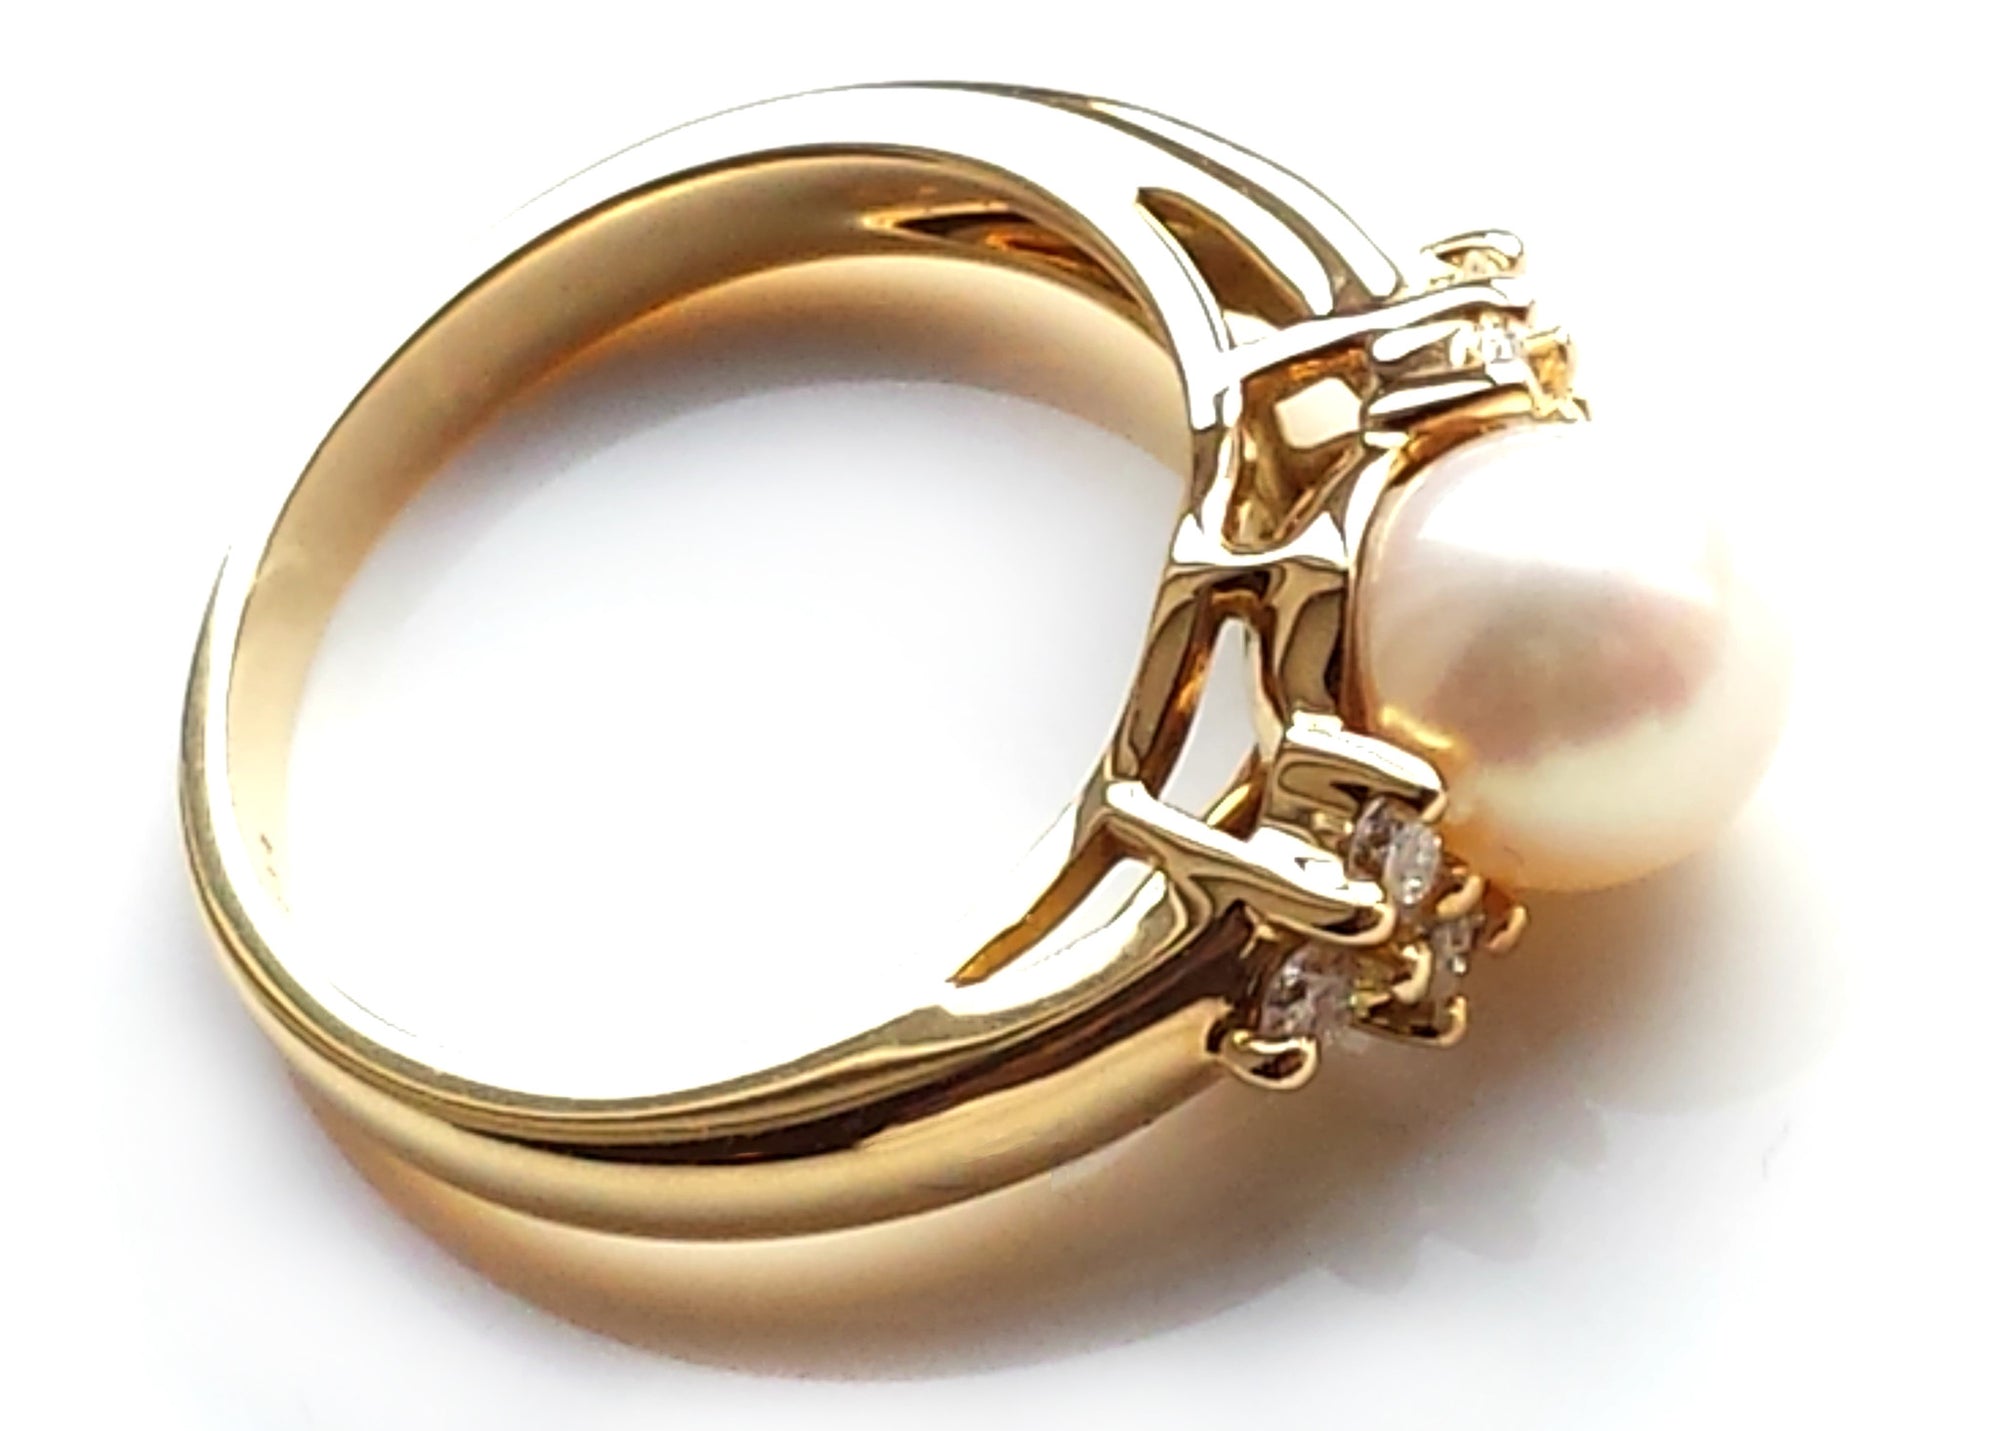 Vintage 1990s Tiffany & Co. 7mm Akoya Pearl & Diamond Ring in 18k Gold